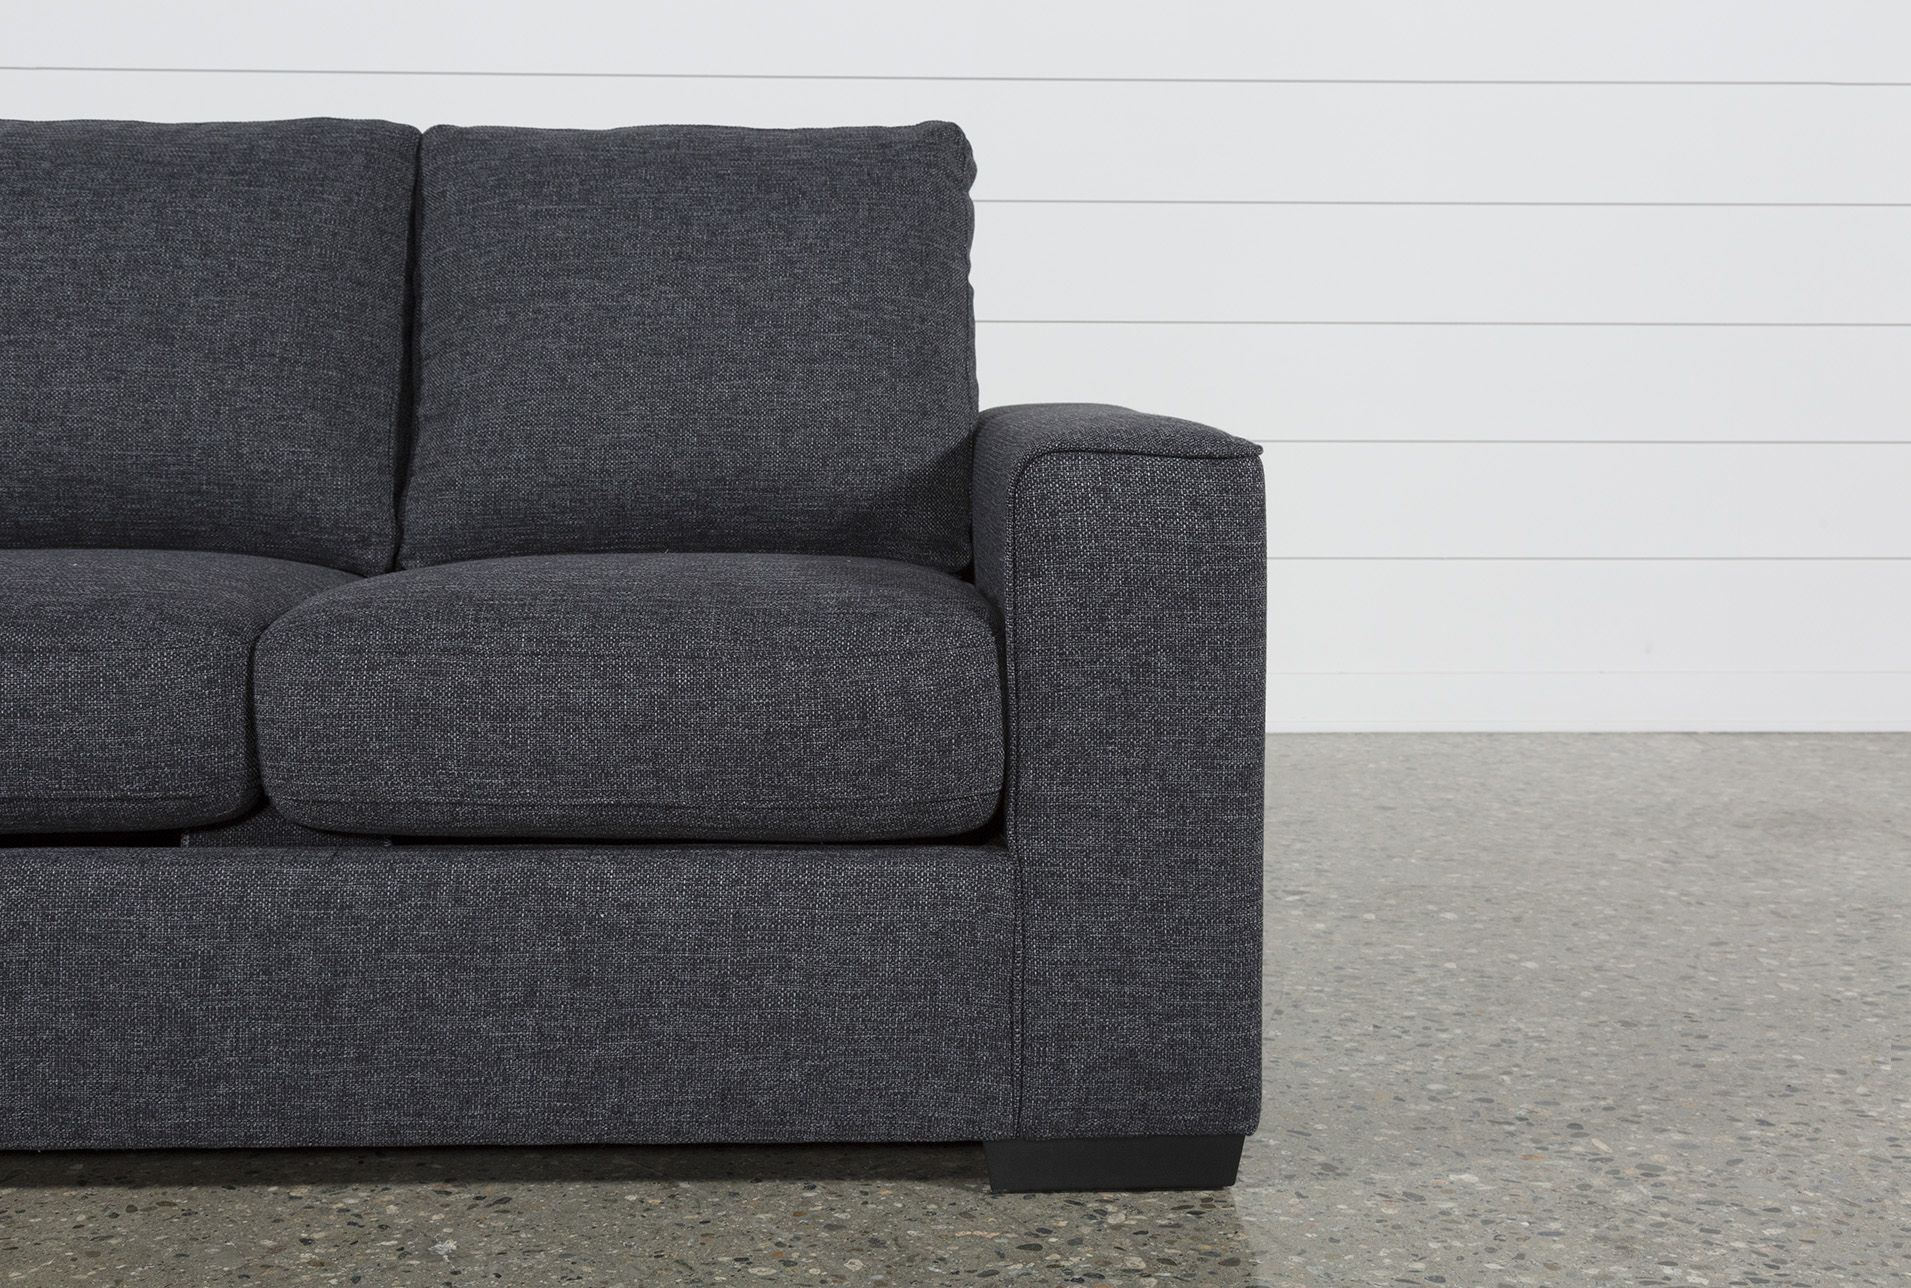 Lucy Dark Grey Queen Sleeper | Products | Pinterest | Dark Grey And Within Lucy Dark Grey Sofa Chairs (View 7 of 20)